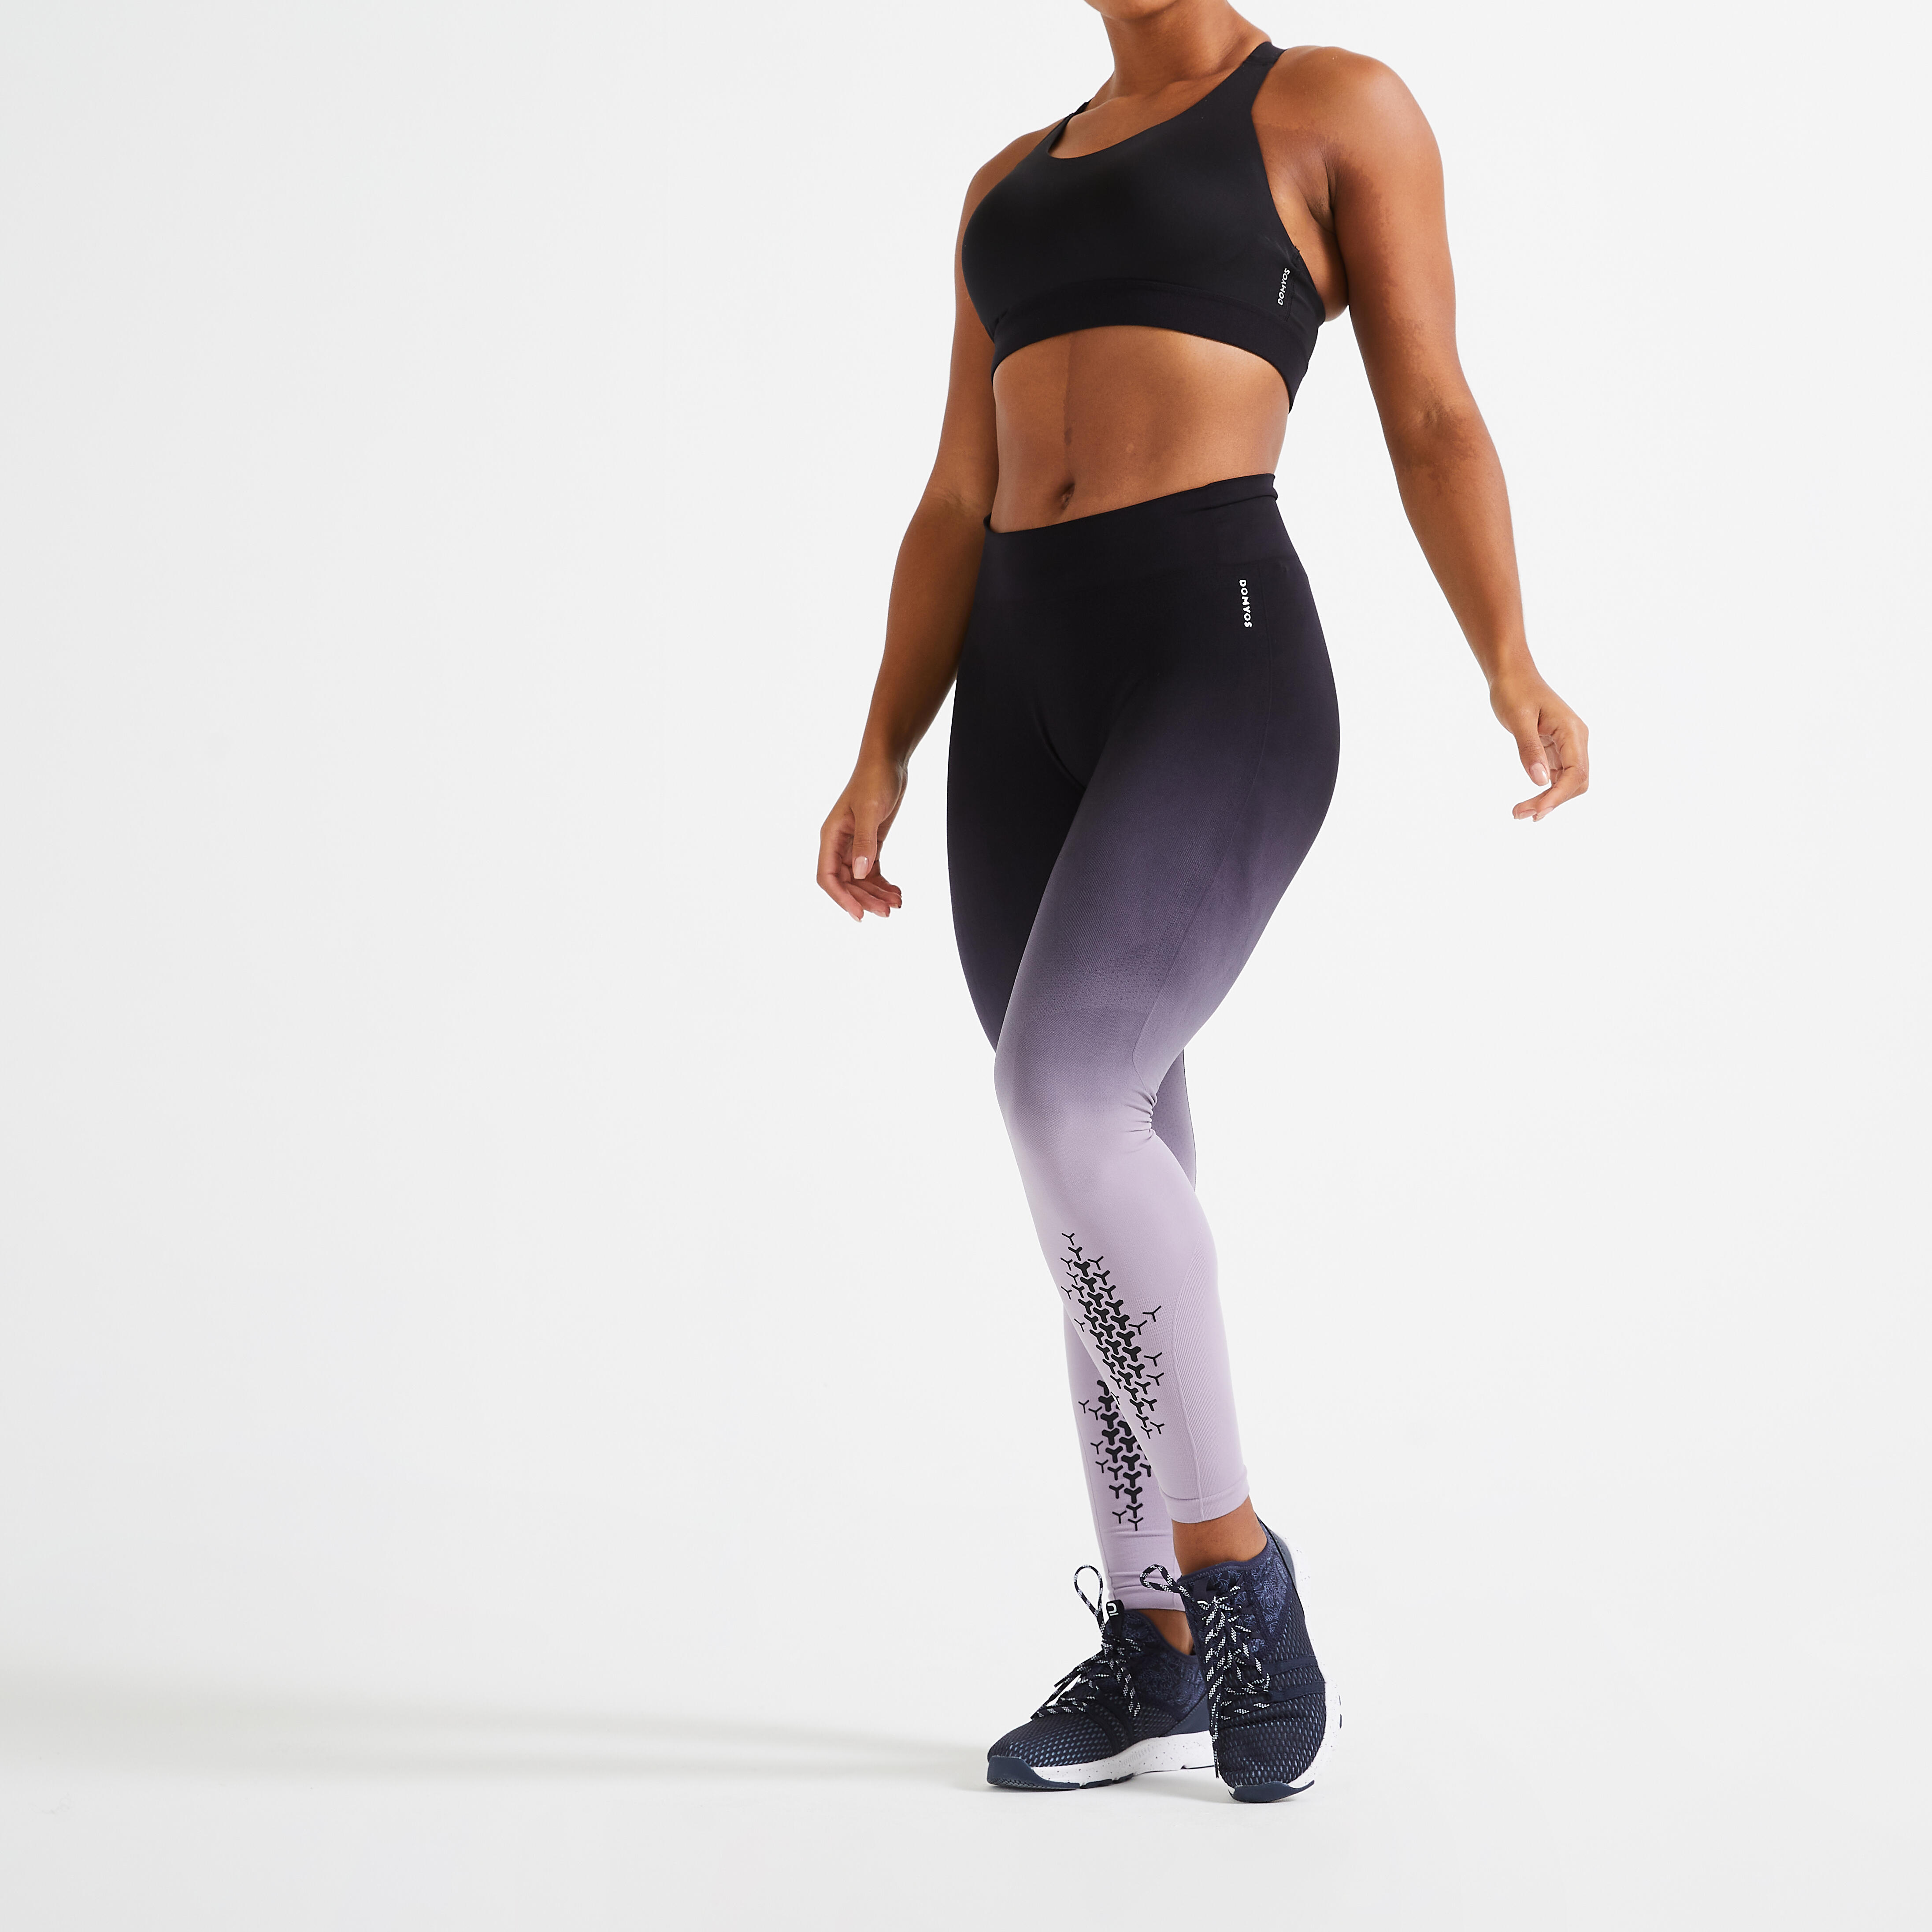 CHKOKKO Women Skinny Fit Yoga Track Pants Stretchable Gym Legging Tights  Black Size M,Size -30